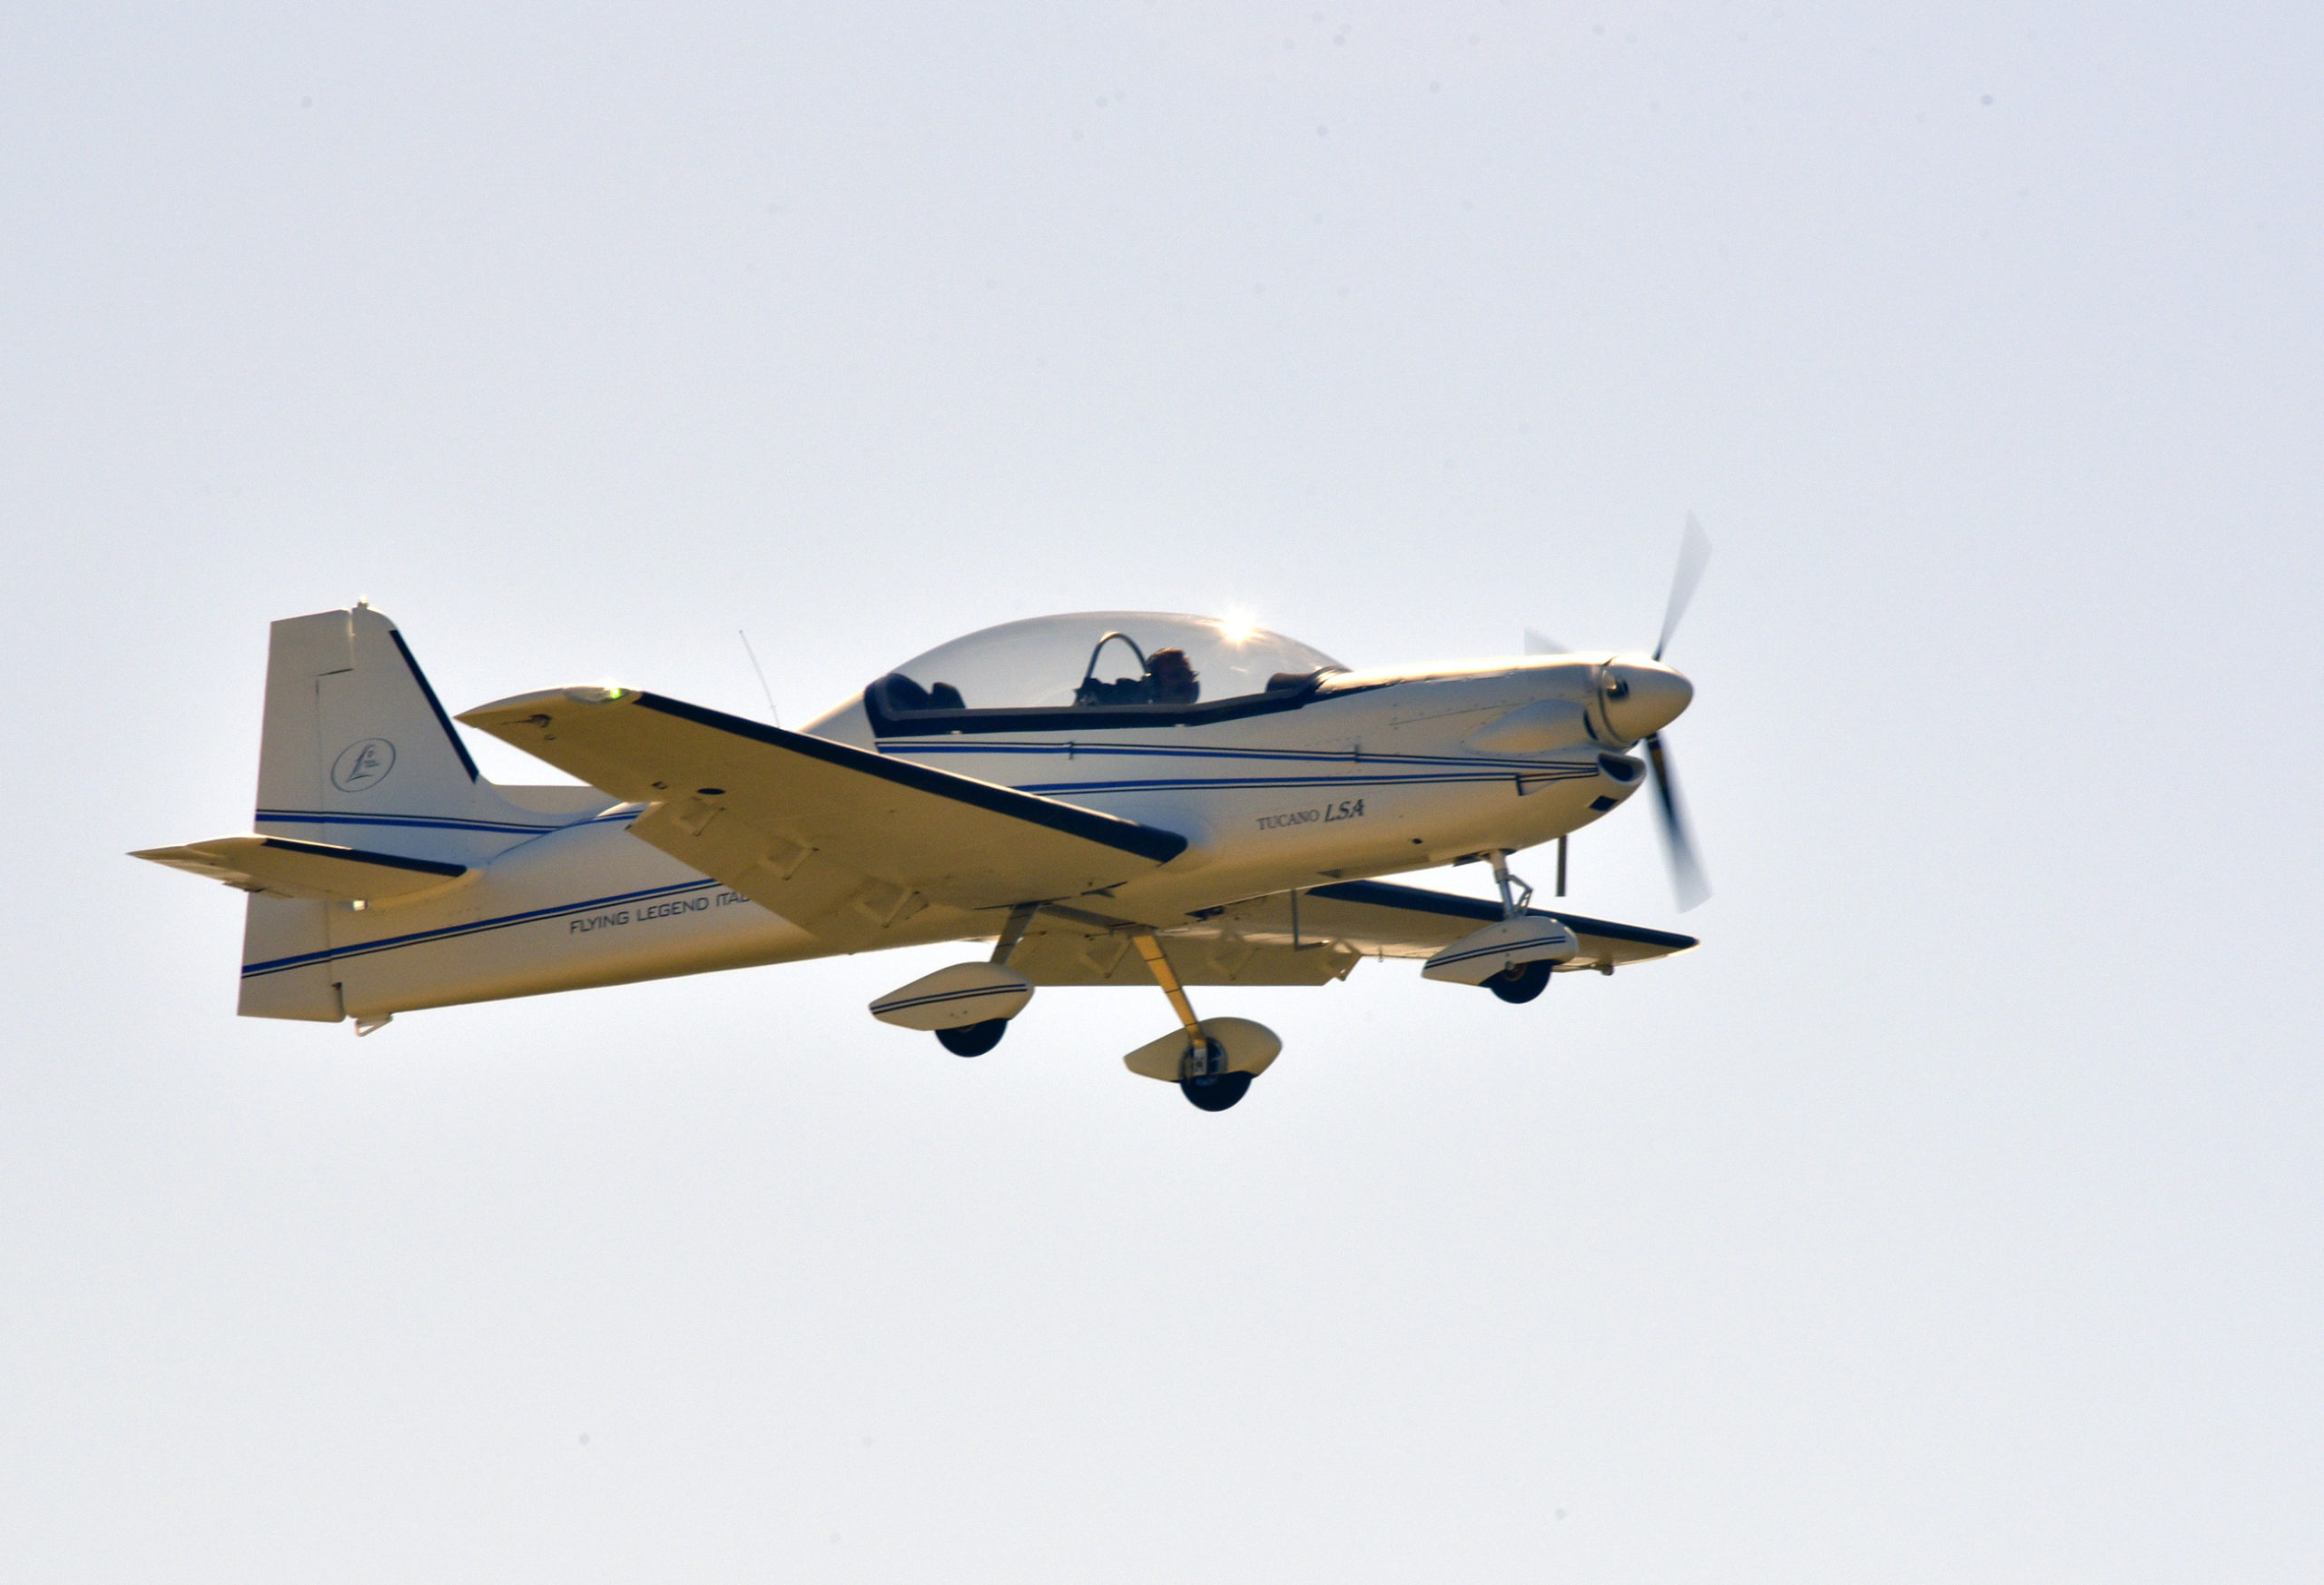 Avião ultraleve experimental - TUCANO-R - Flying Legend - de 2